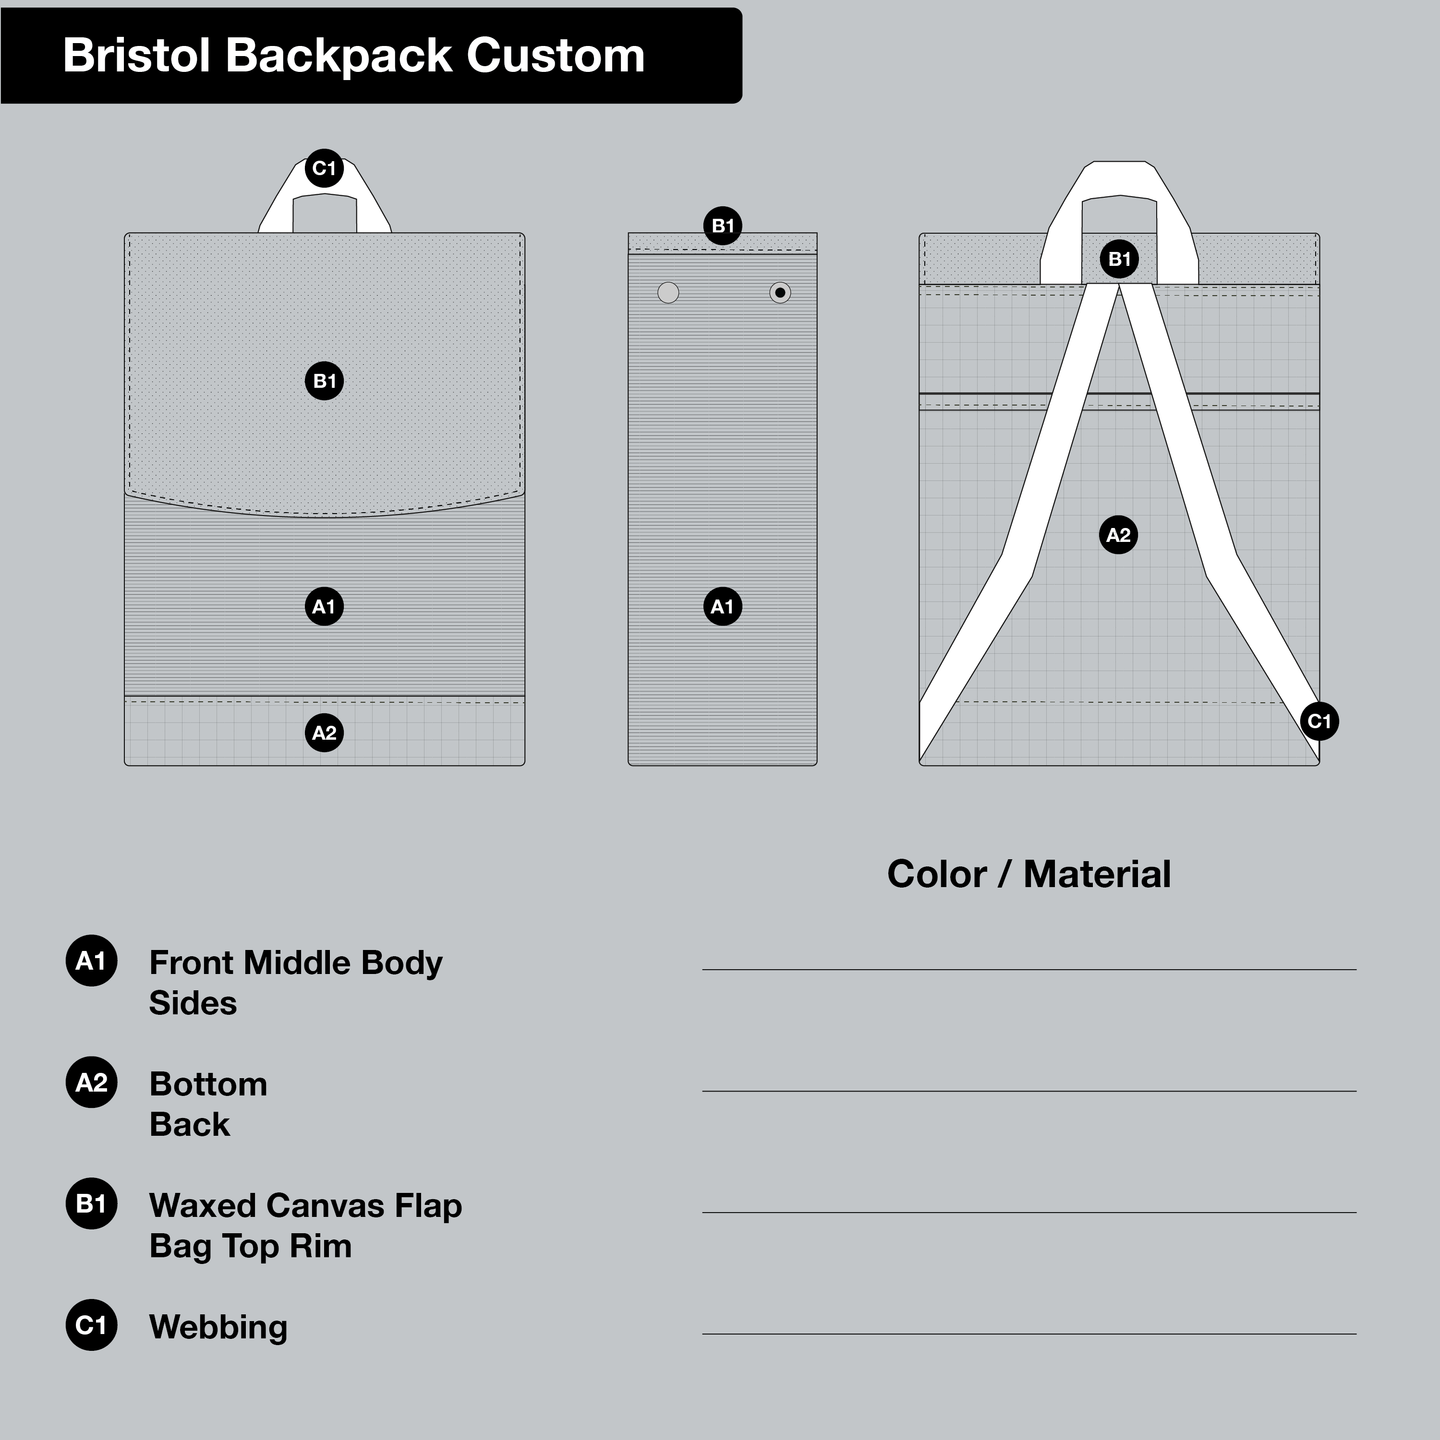 Bristol Backpack Custom